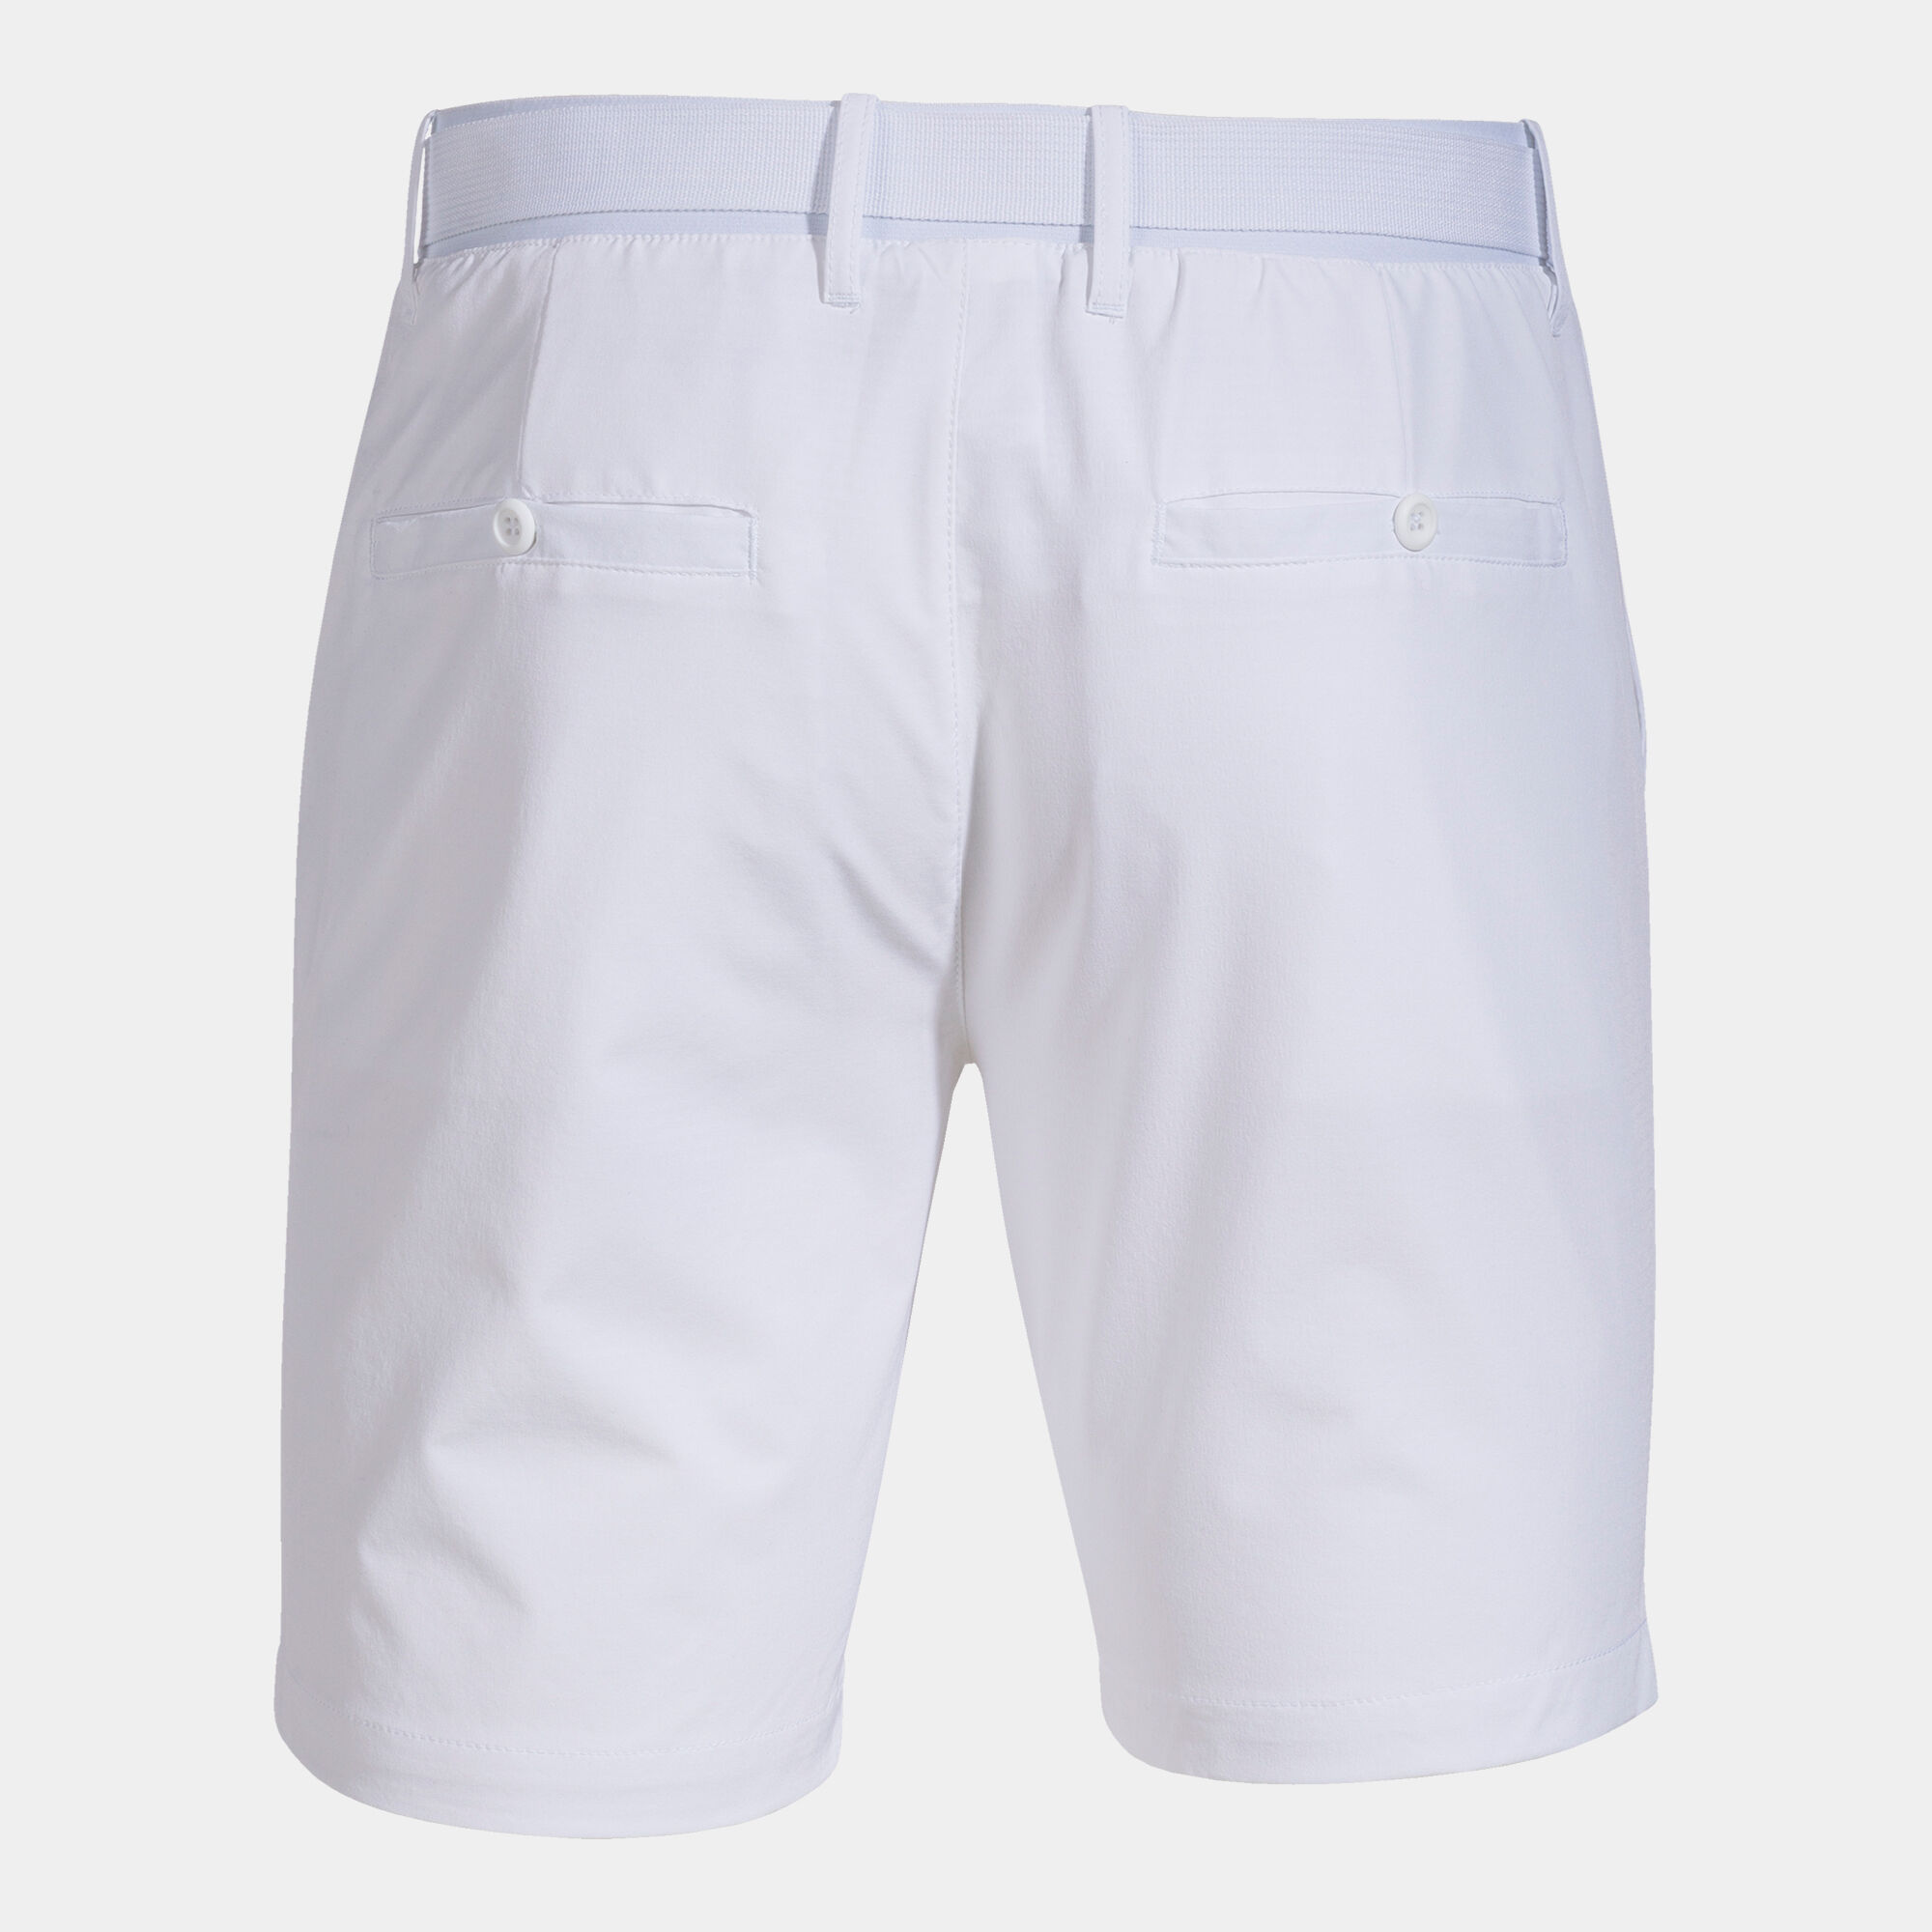 Bermuda shorts man Pasarela III white